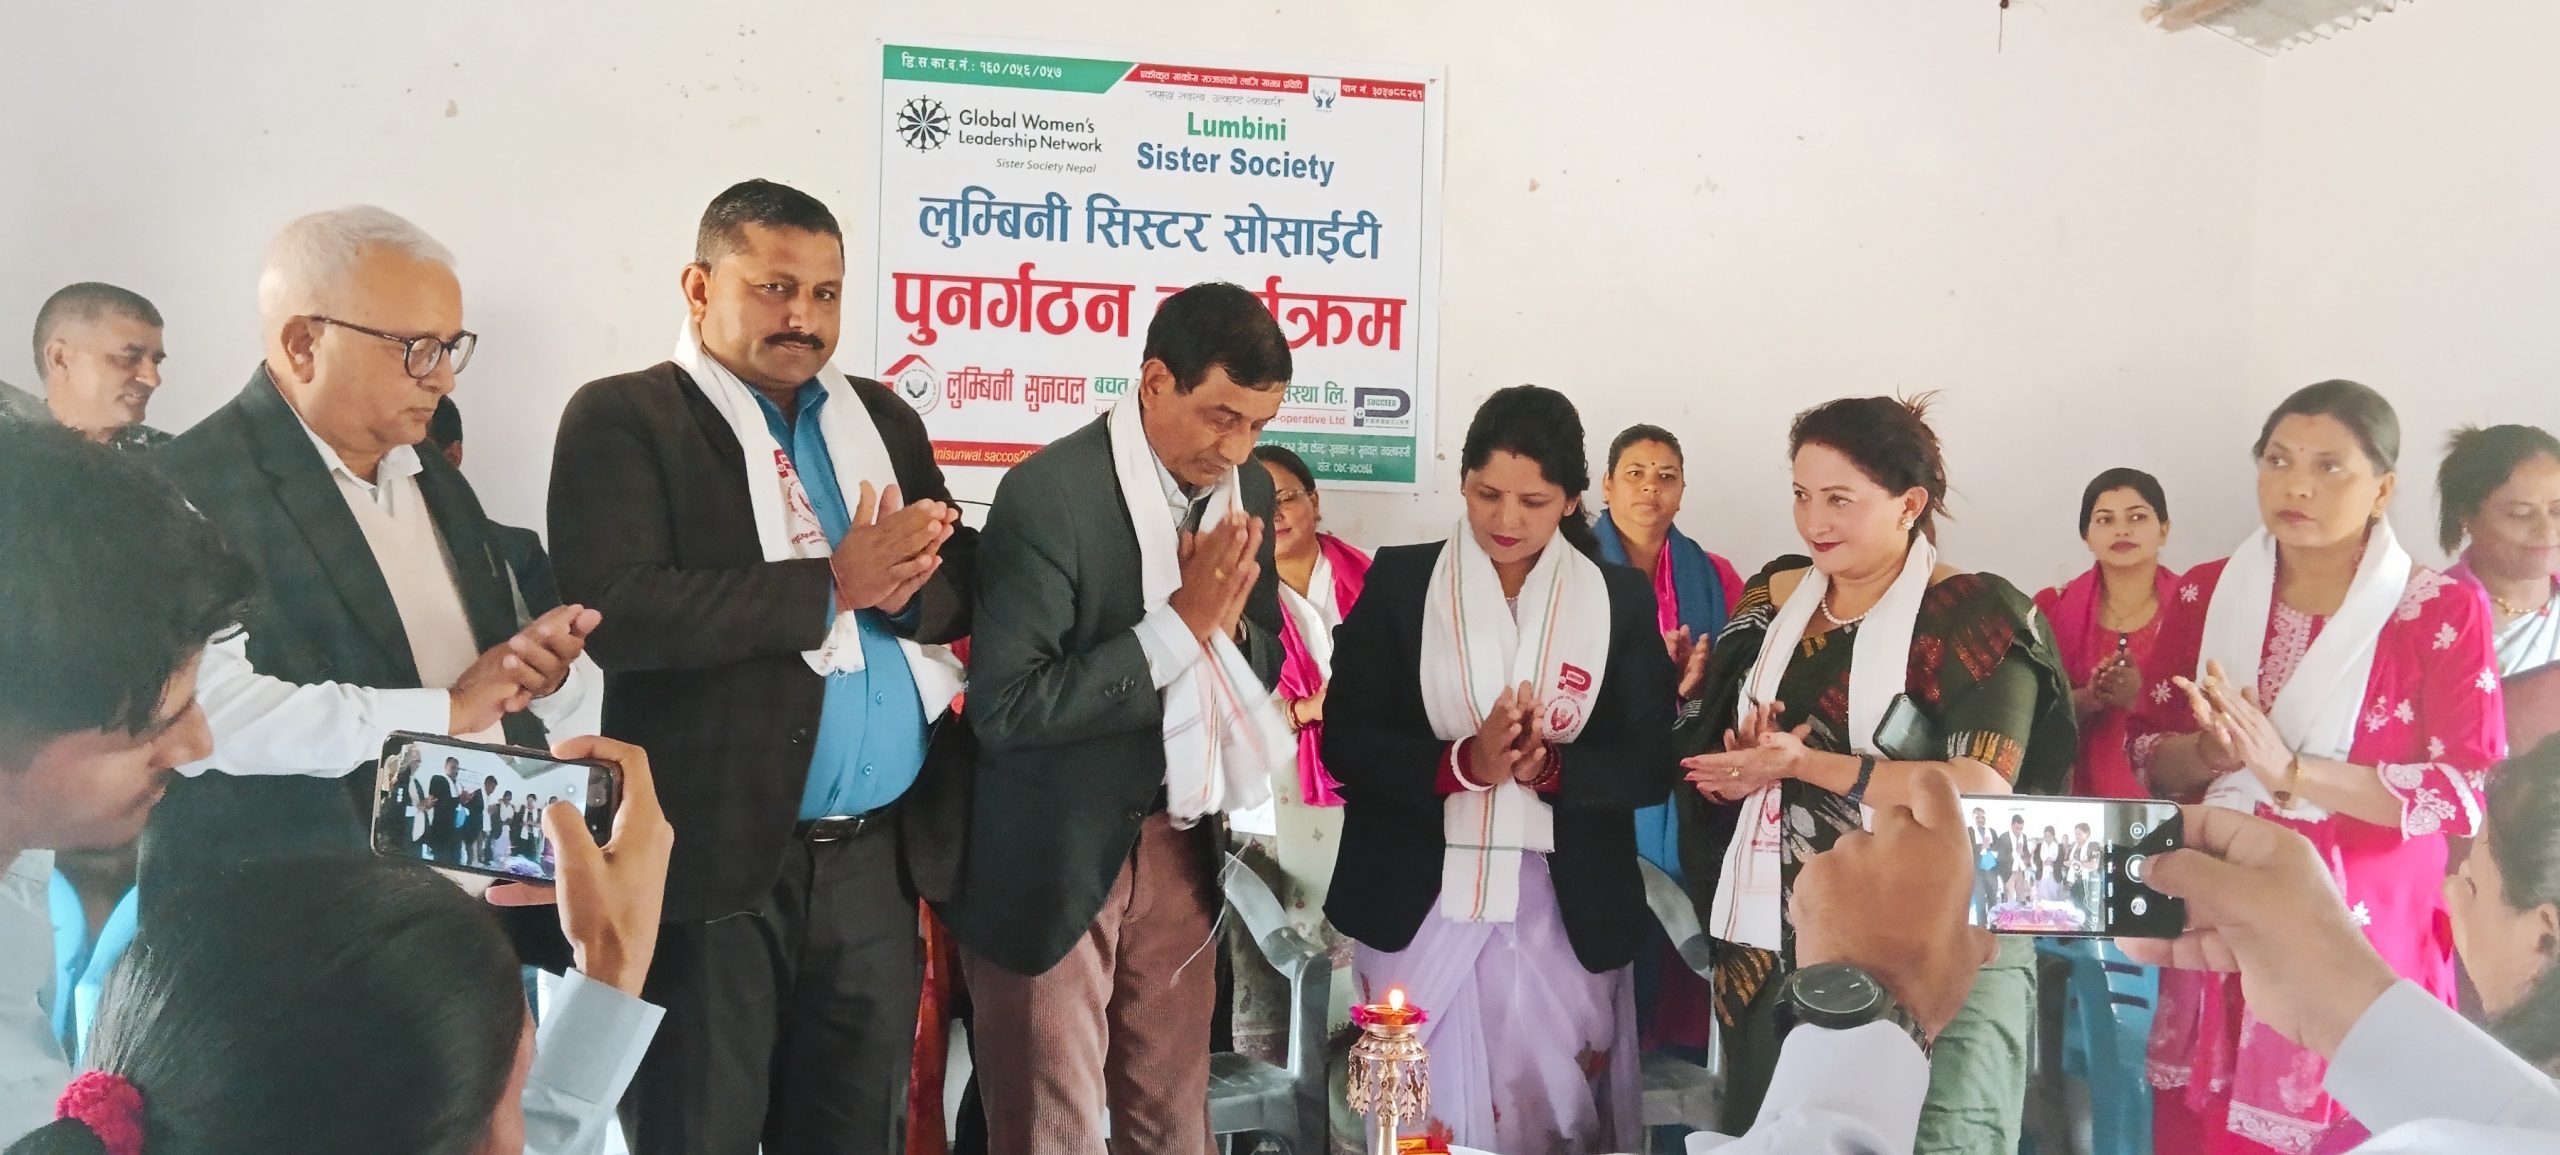 लुम्बिनी सिस्टर साेसाईटी पुनर्गठन कार्यक्रम आज सम्पन्न